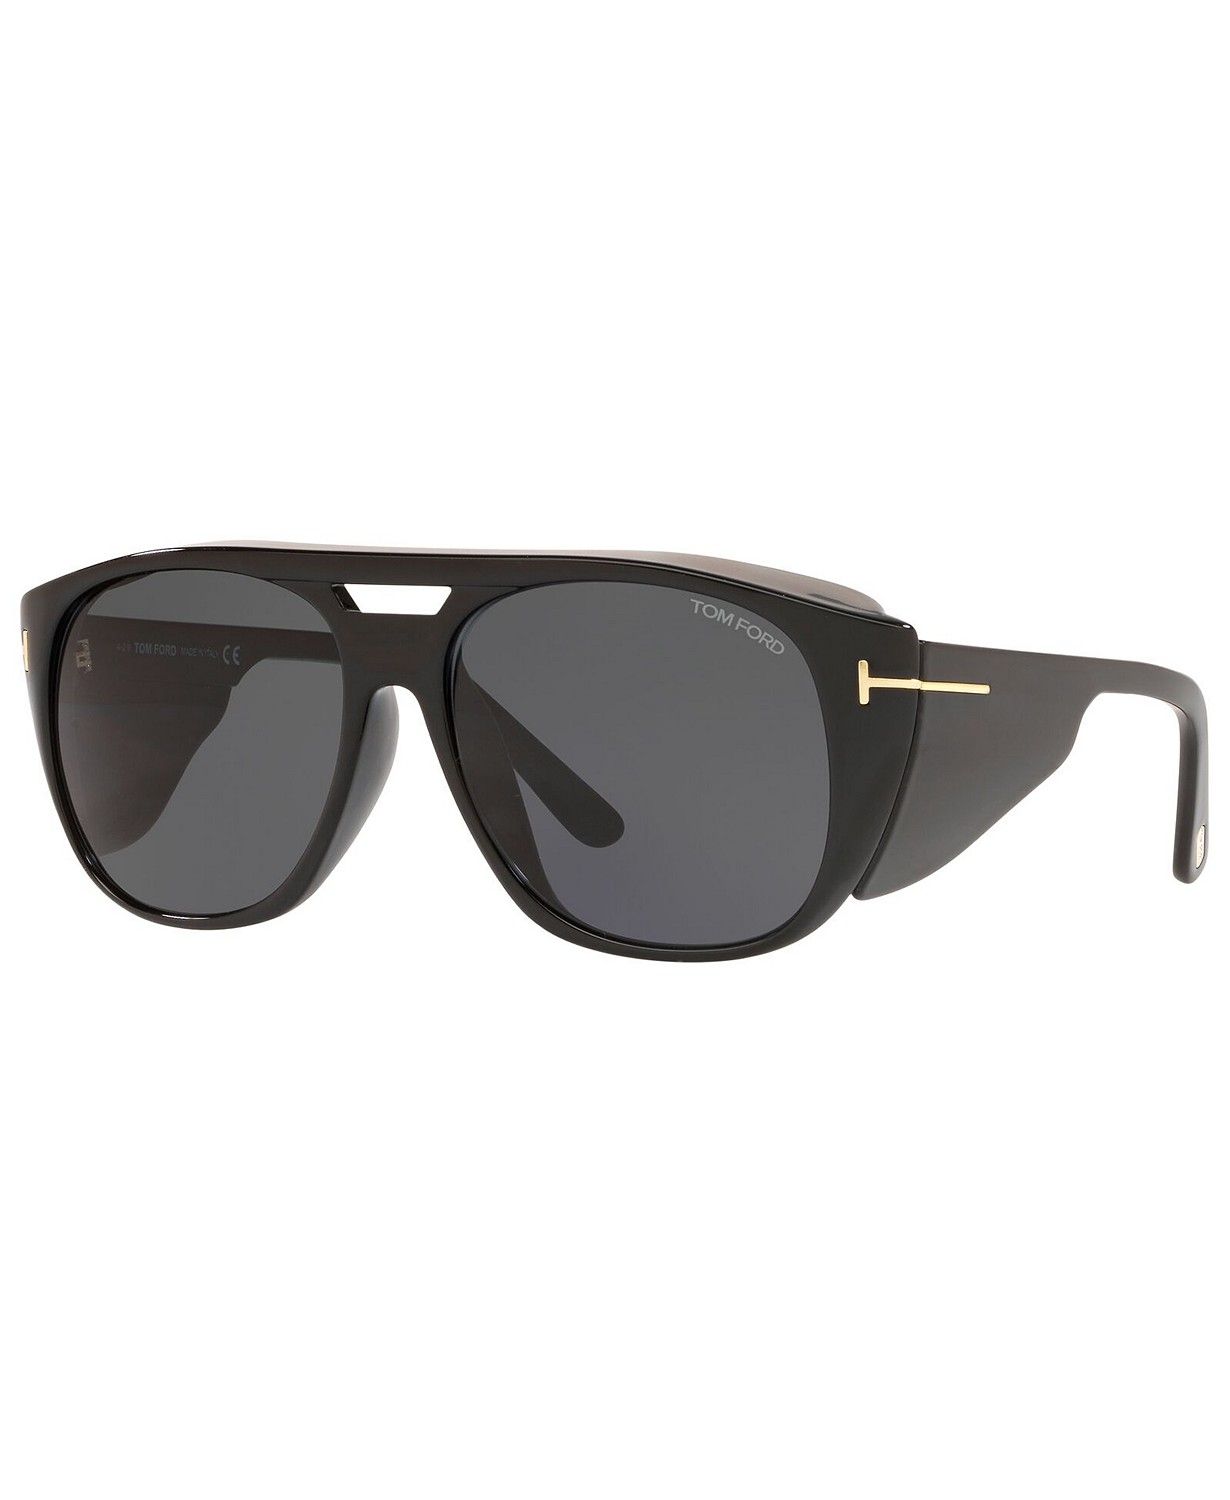 Tom Ford Men's Sunglasses & Reviews - Sunglasses by Sunglass Hut - Men - Macy's | Macys (US)